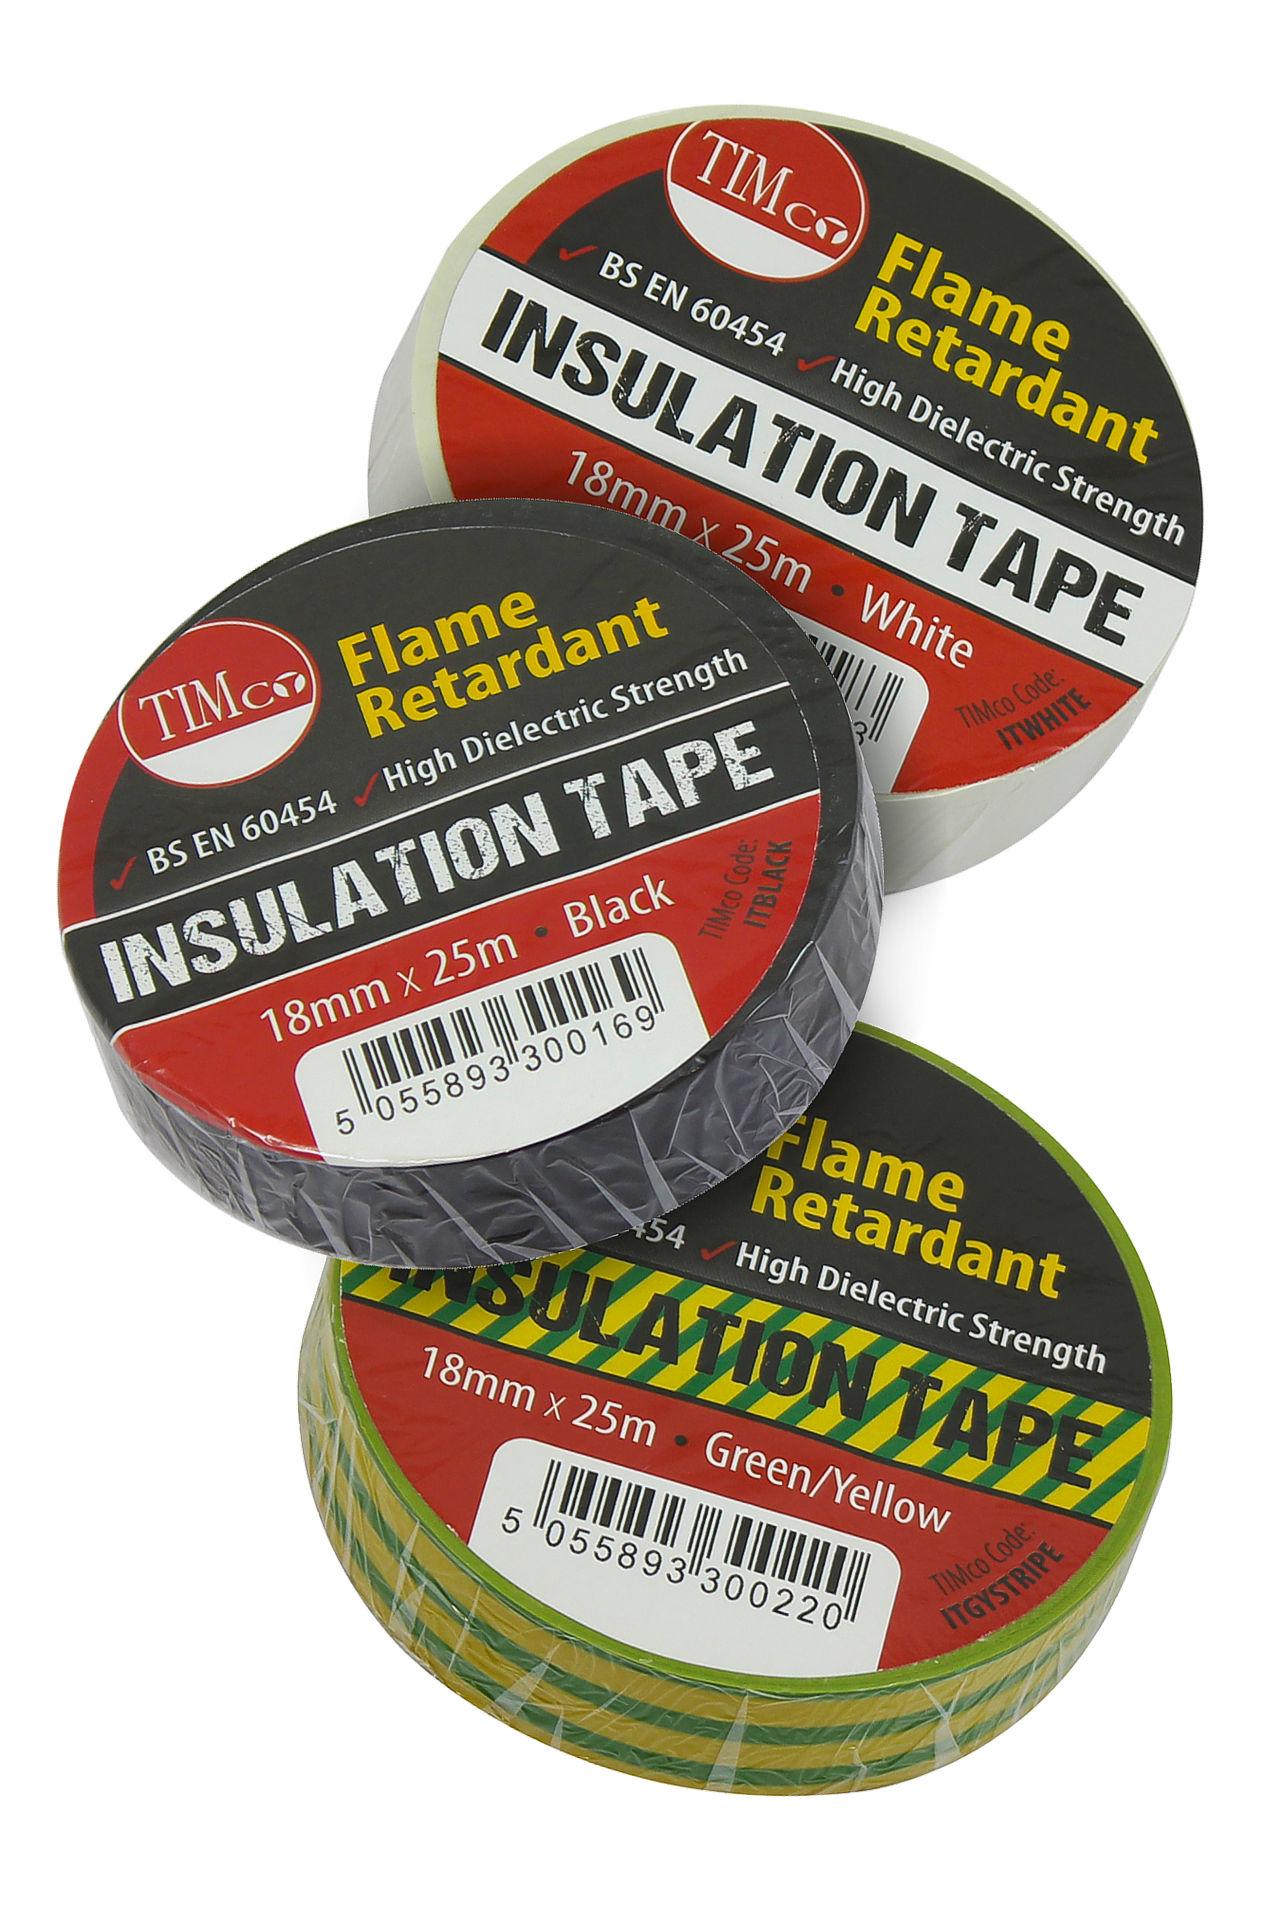 PVC Insulation Tape - 25m x 18mm